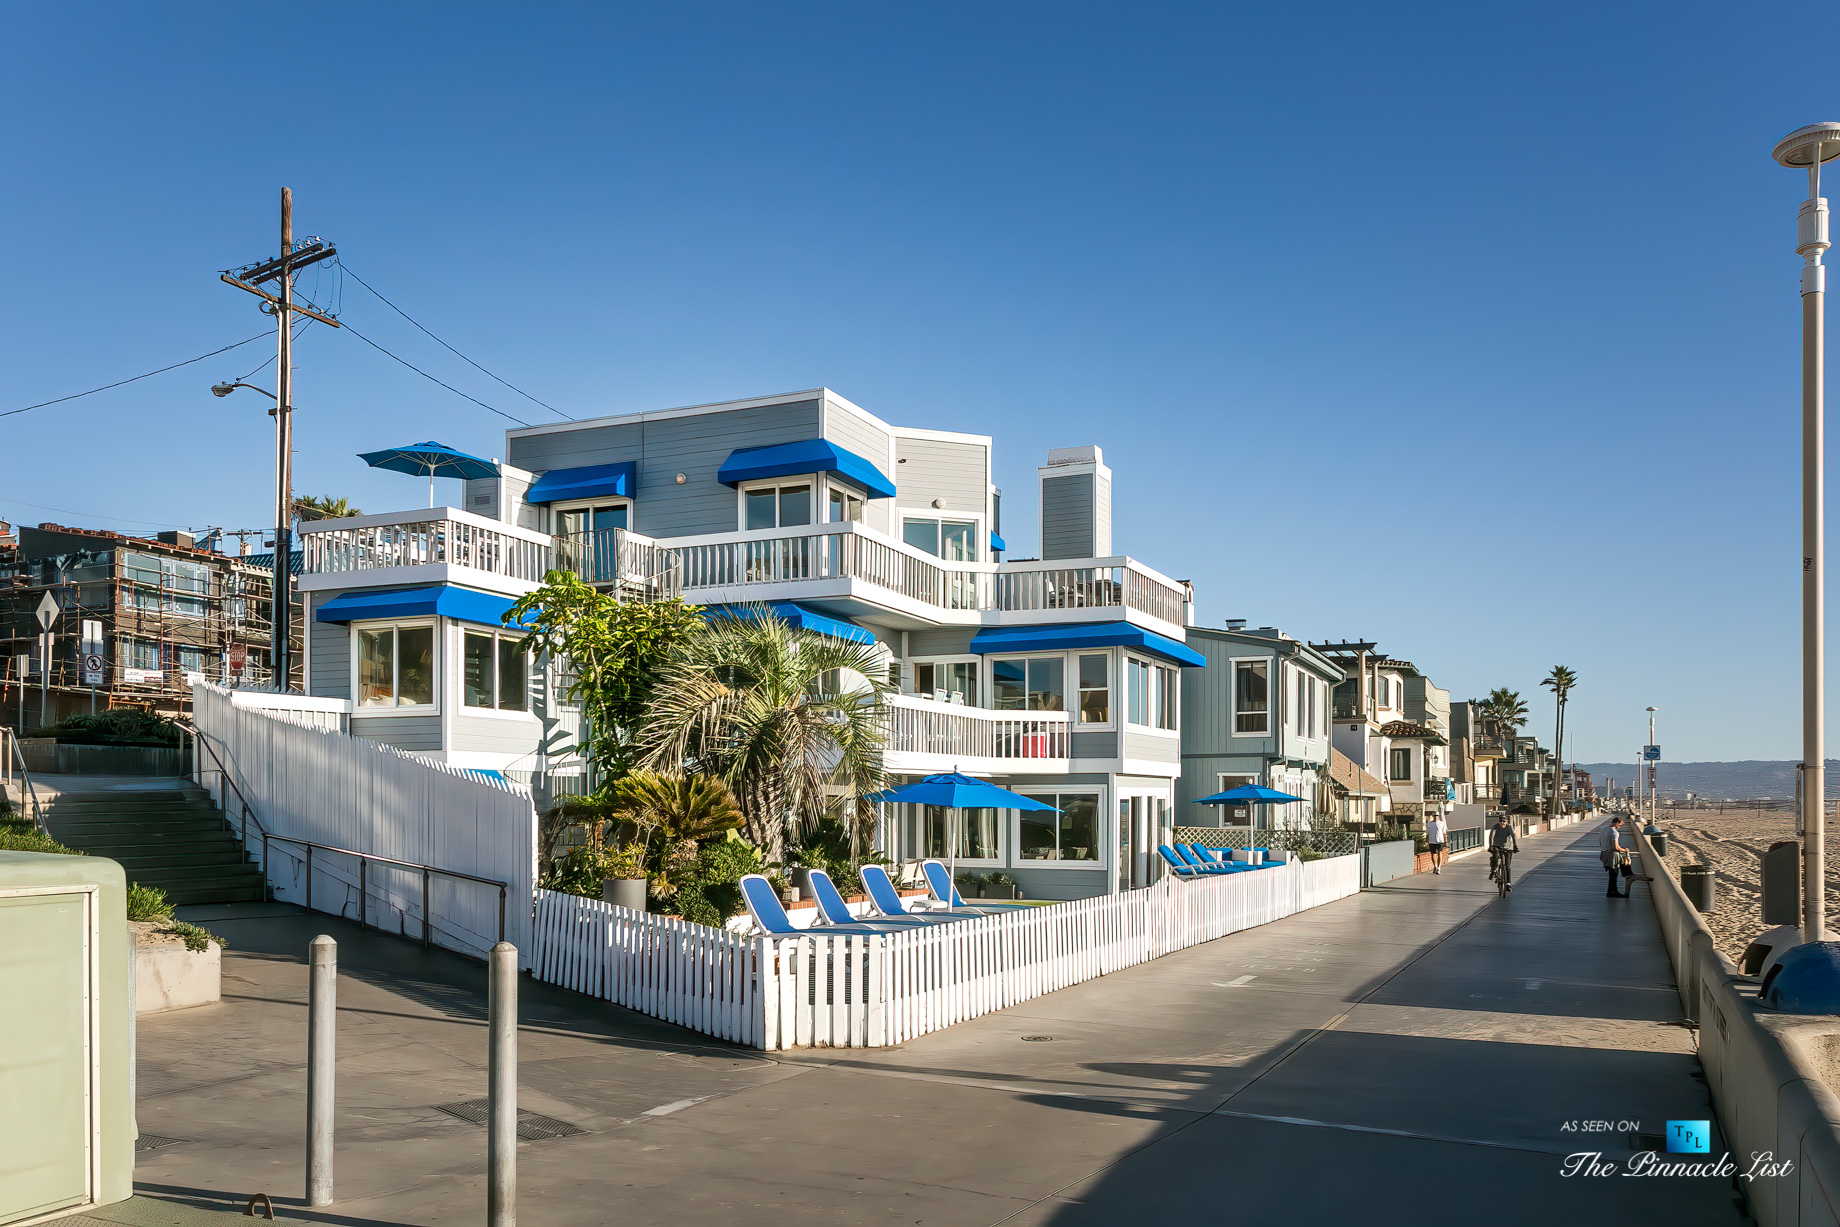 3500 The Strand, Hermosa Beach, CA, USA – Luxury Real Estate – Original 90210 Beach House - Oceanfront Home